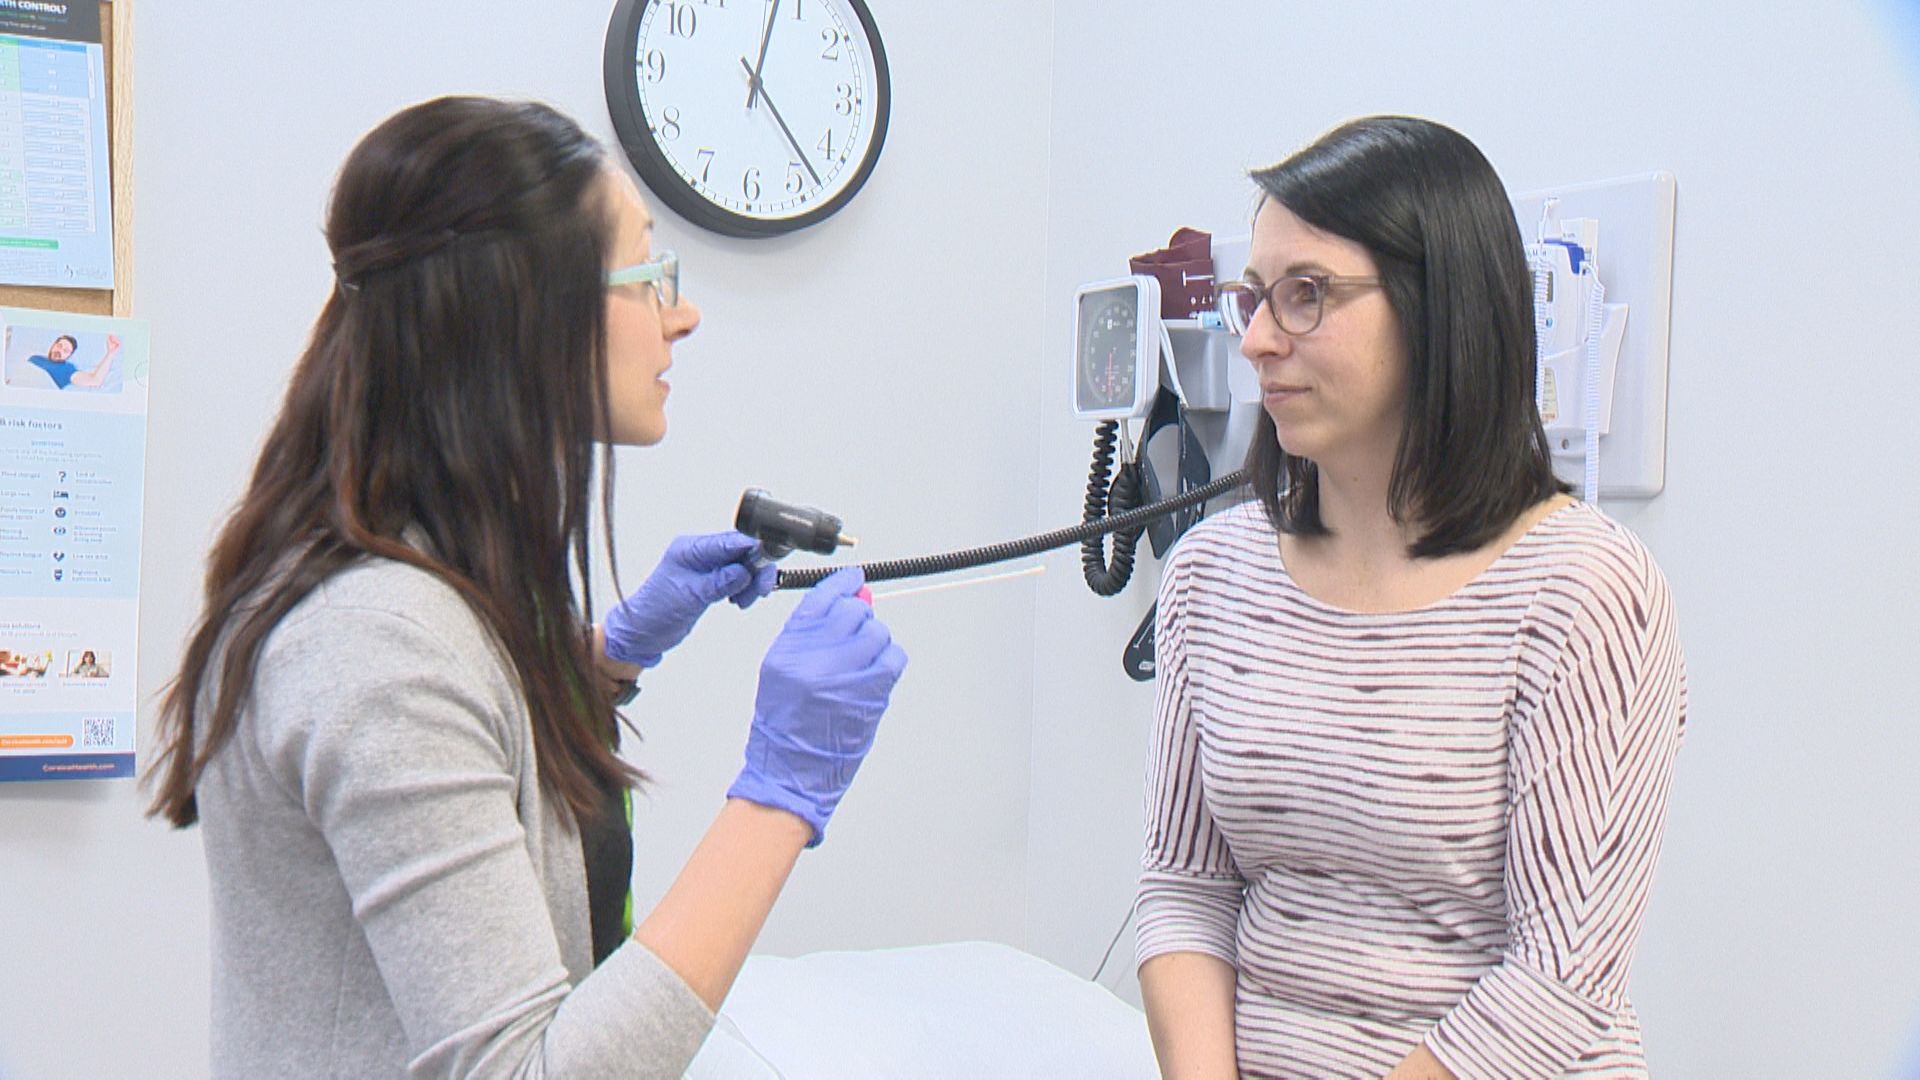 Saskatchewan sees strep throat, measles cases as winter rages on